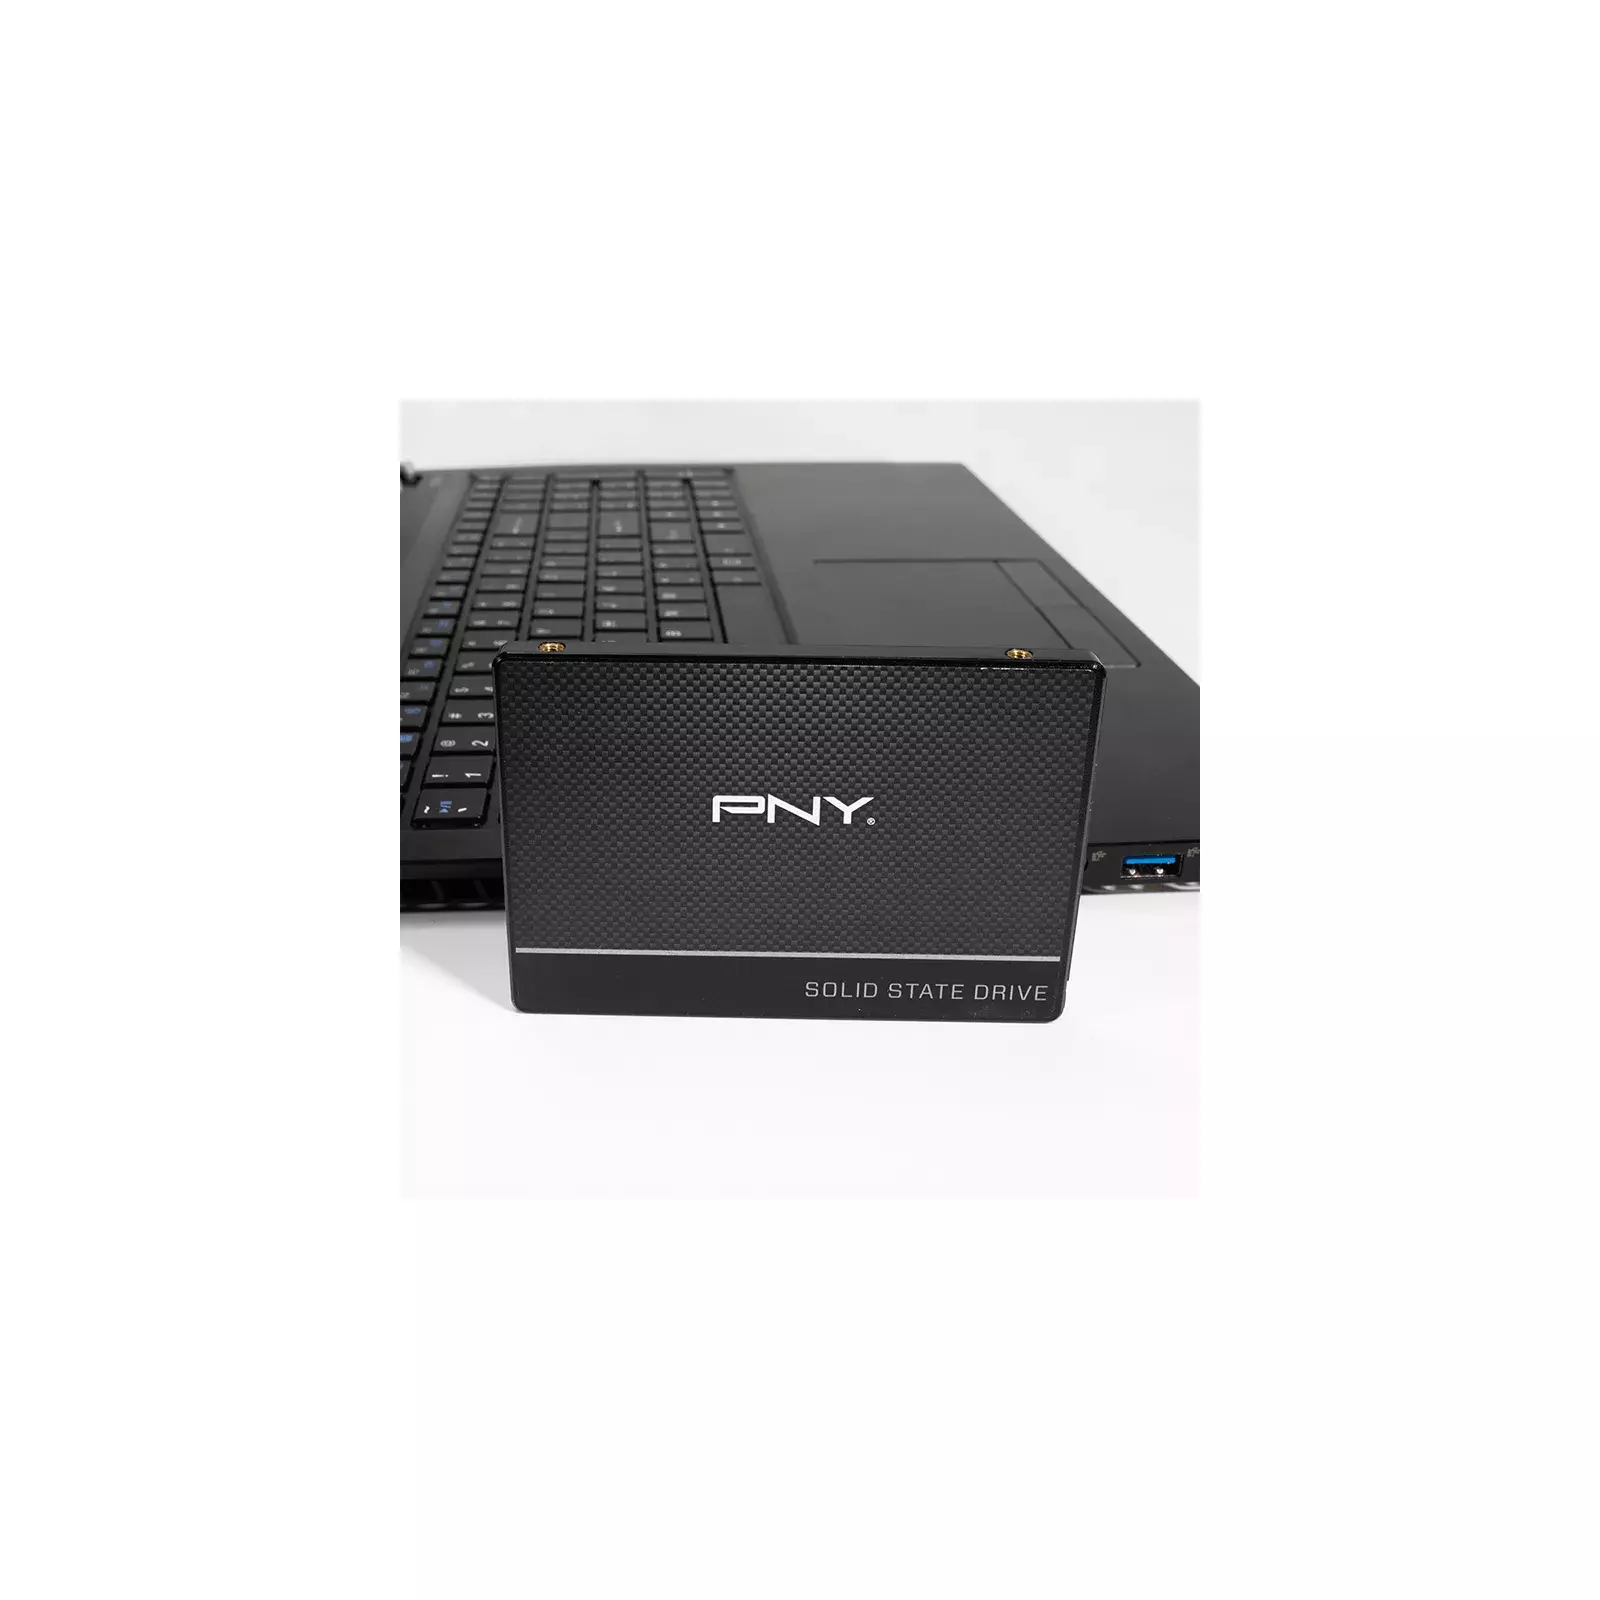 PNY SSD7CS900-4TB-RB Photo 2